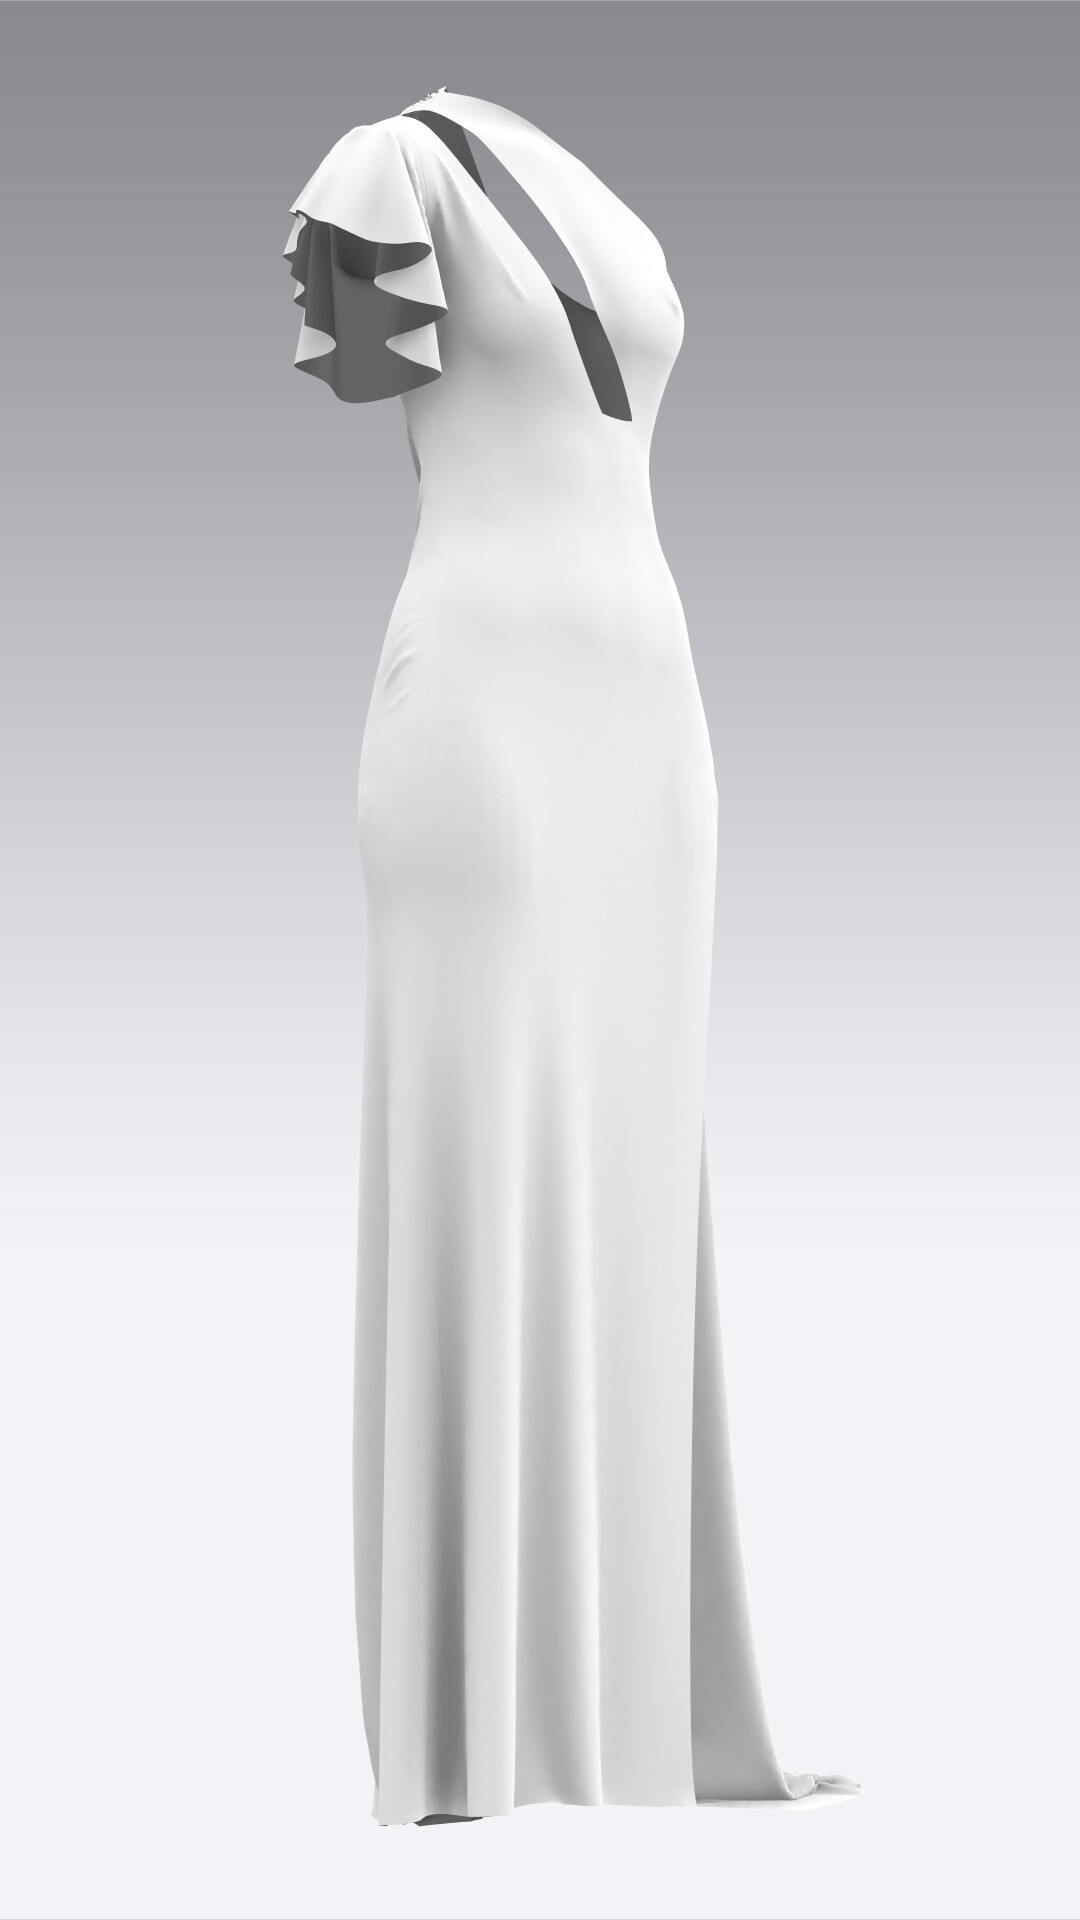 ArtStation - Dress Outfits MD CLO 3D ZPRJ ZPAC project files 3D model ...